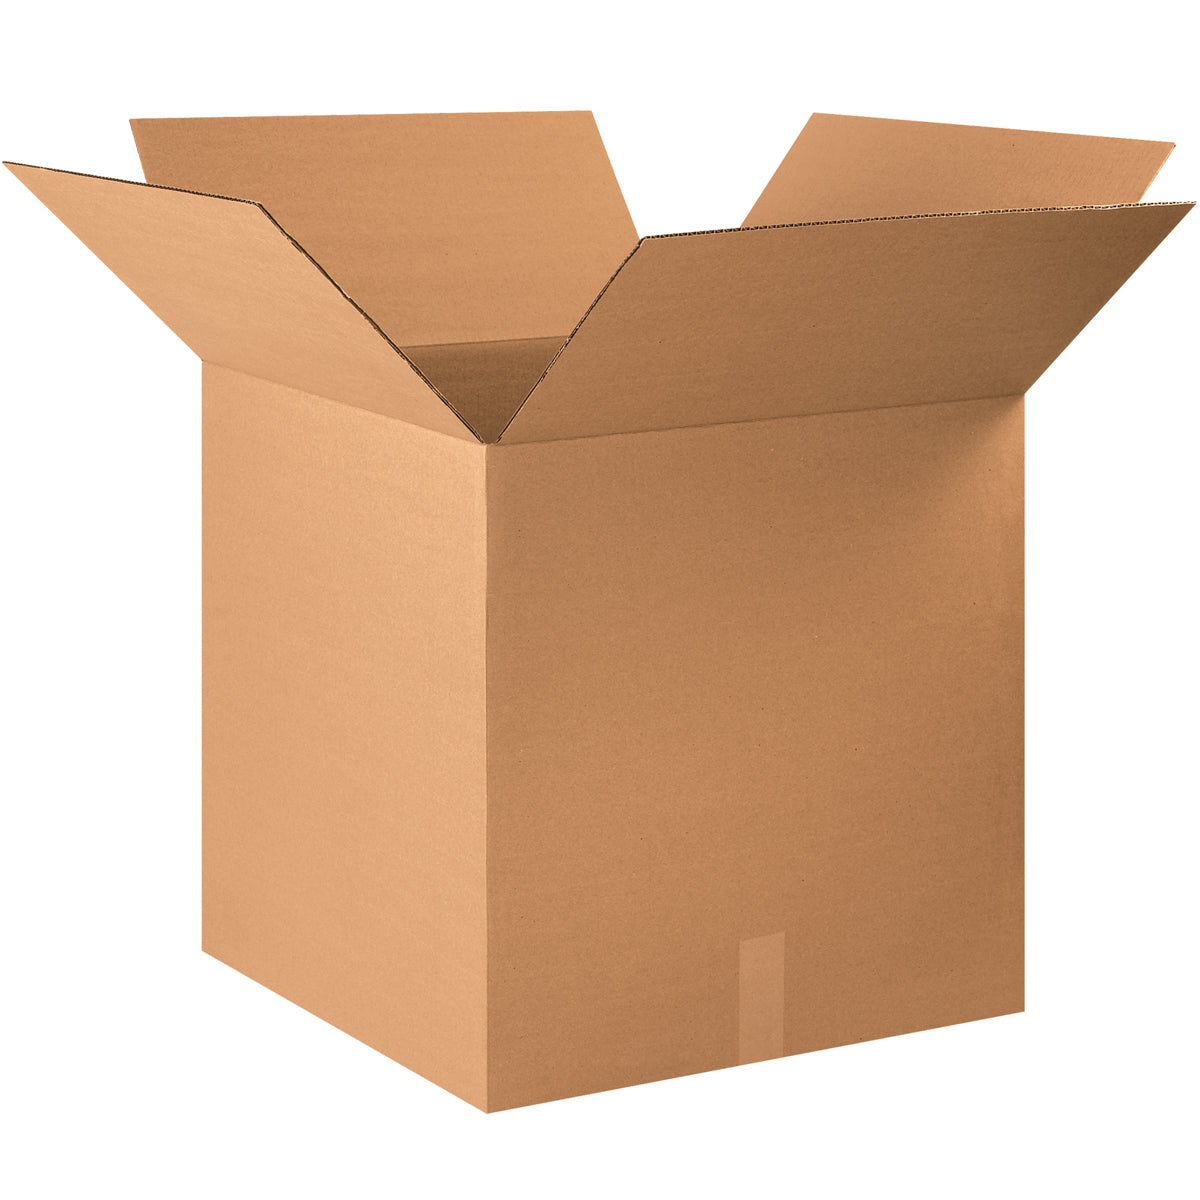 22 x 22 x 22 Heavy Duty Boxes - PackagingSupplies.com